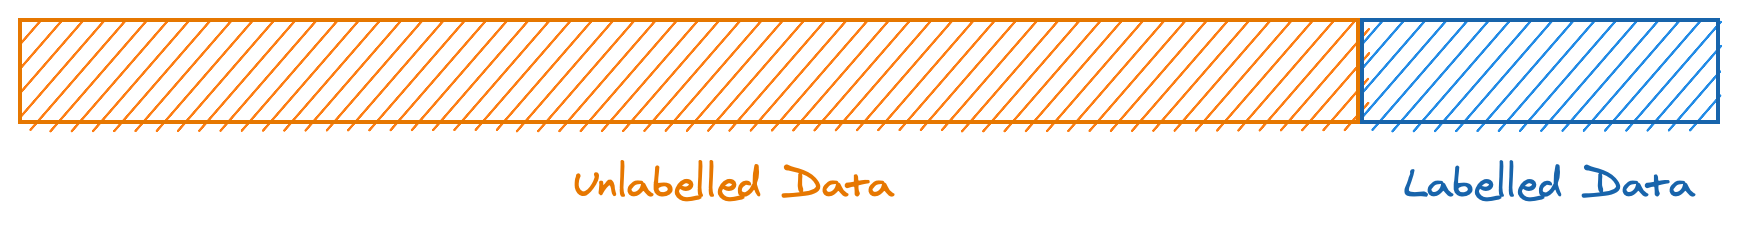 data_in_internet